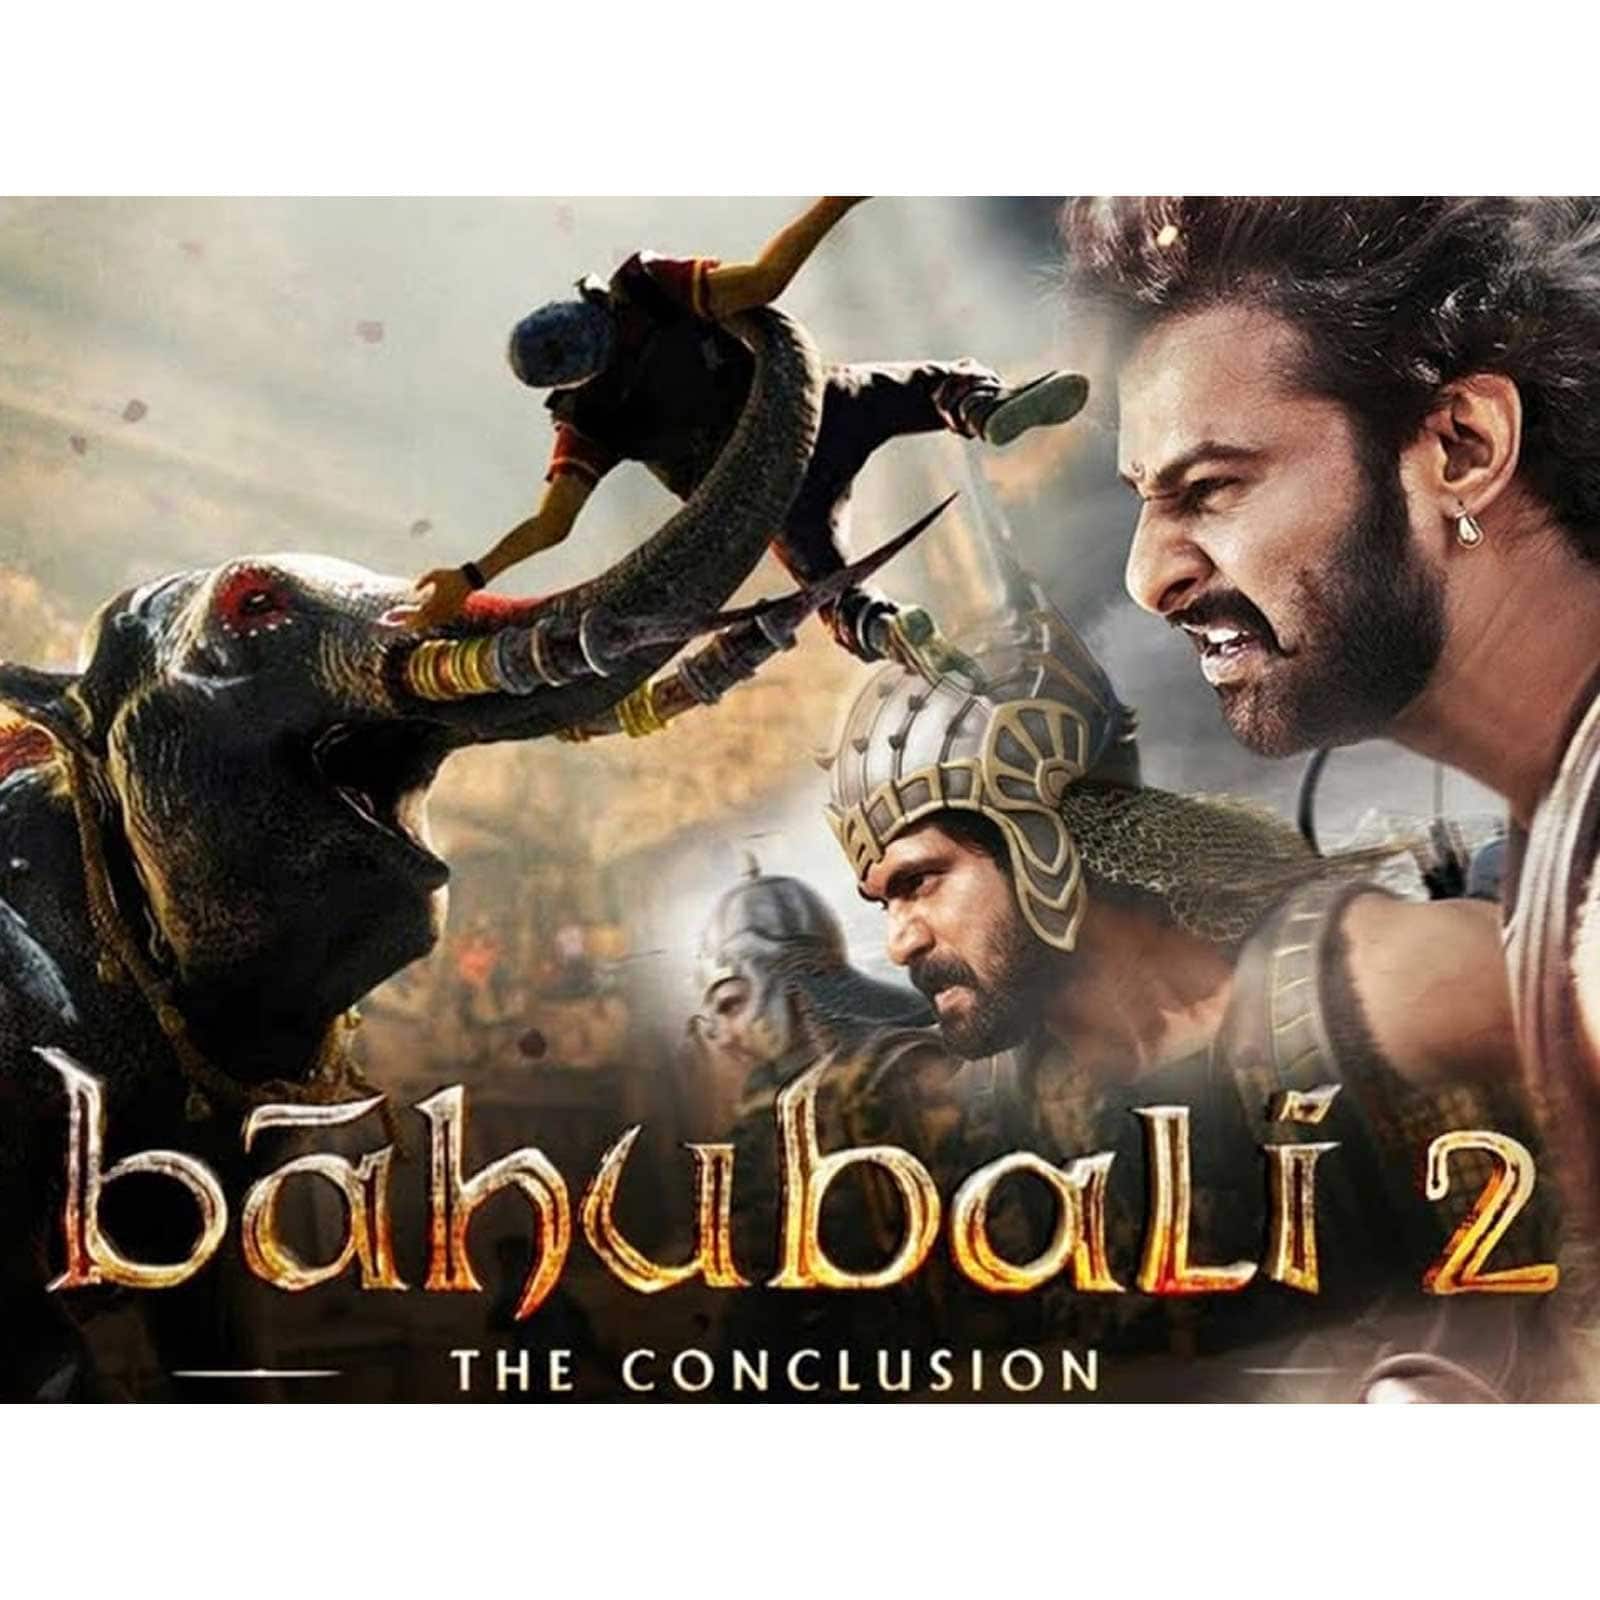 baahubali 2 hindi release usa